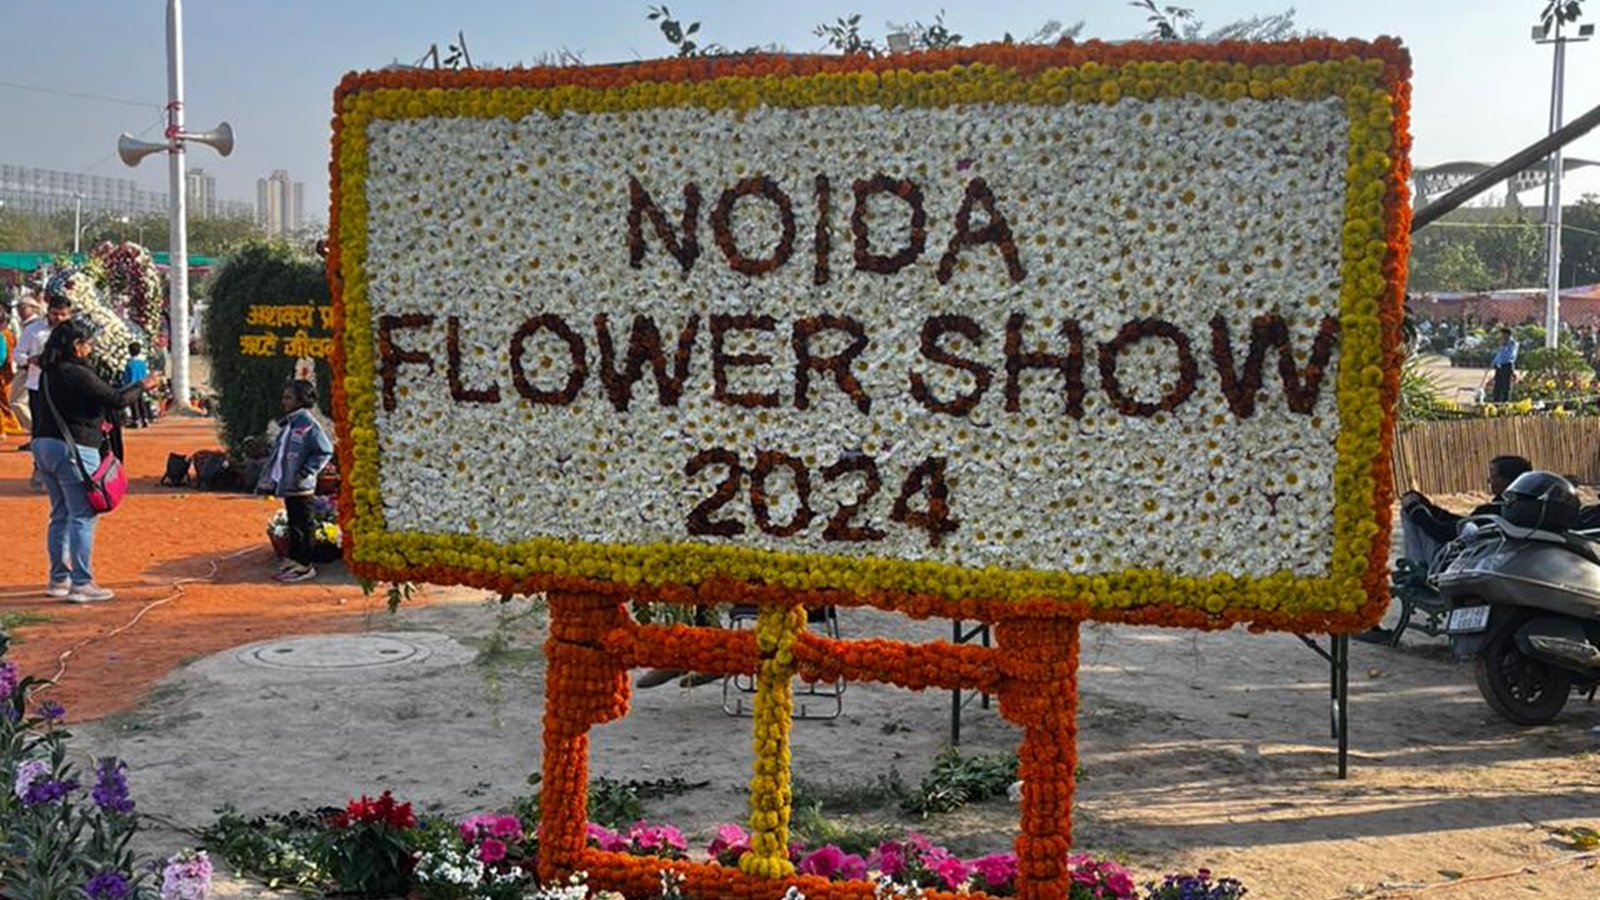 Flower Festival in India – May Flower